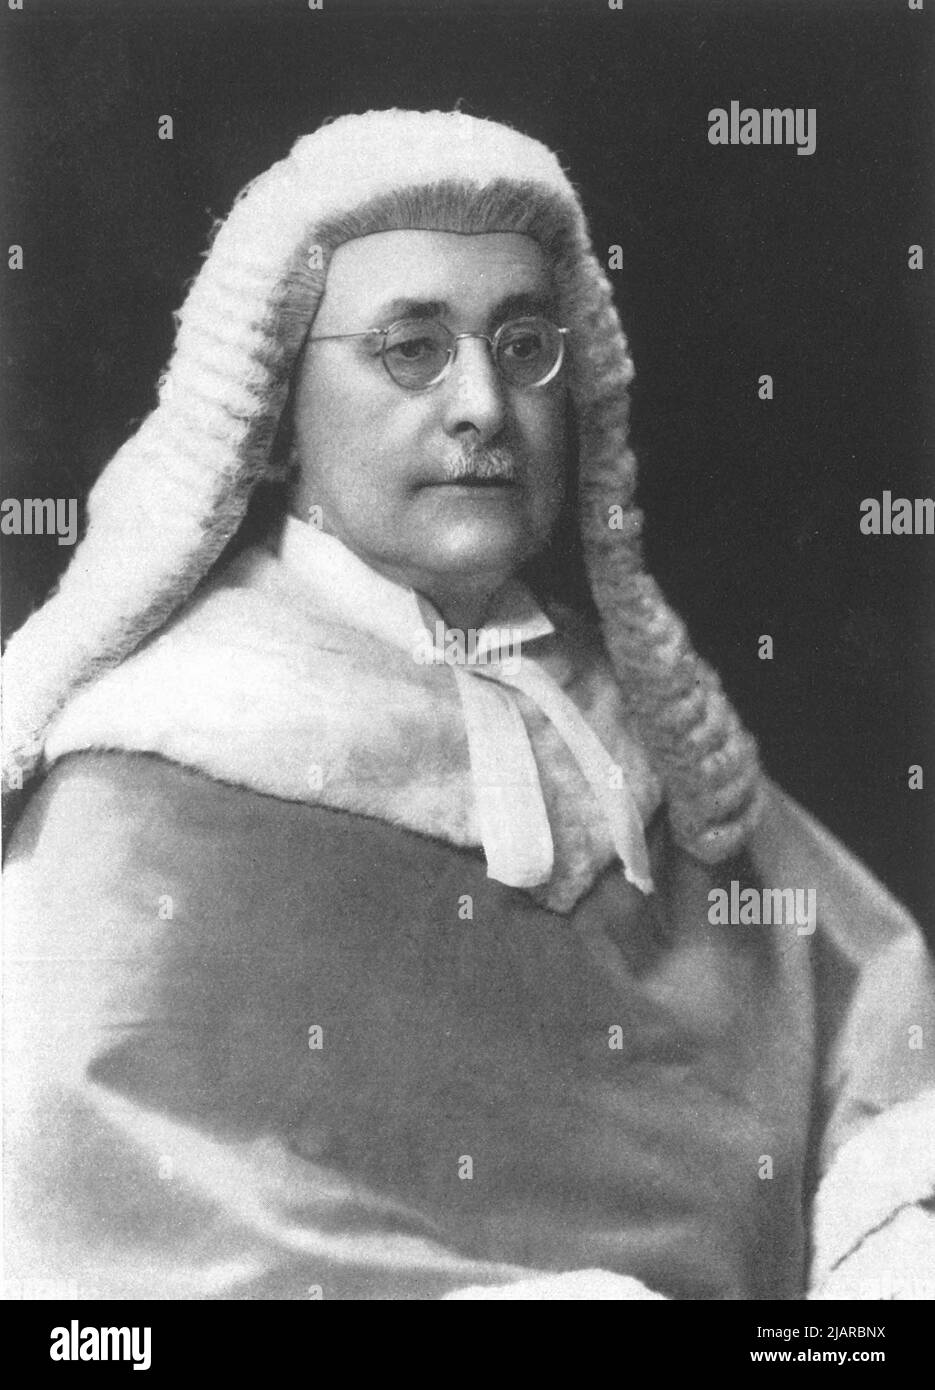 Sir Frederick Jordan, K.C.M.G., B.A., LL.B. Presidente del N.S.W., 1934-49. Lieut.-Gobernador del N.S.W., 1938-49 ca. 1950 Foto de stock